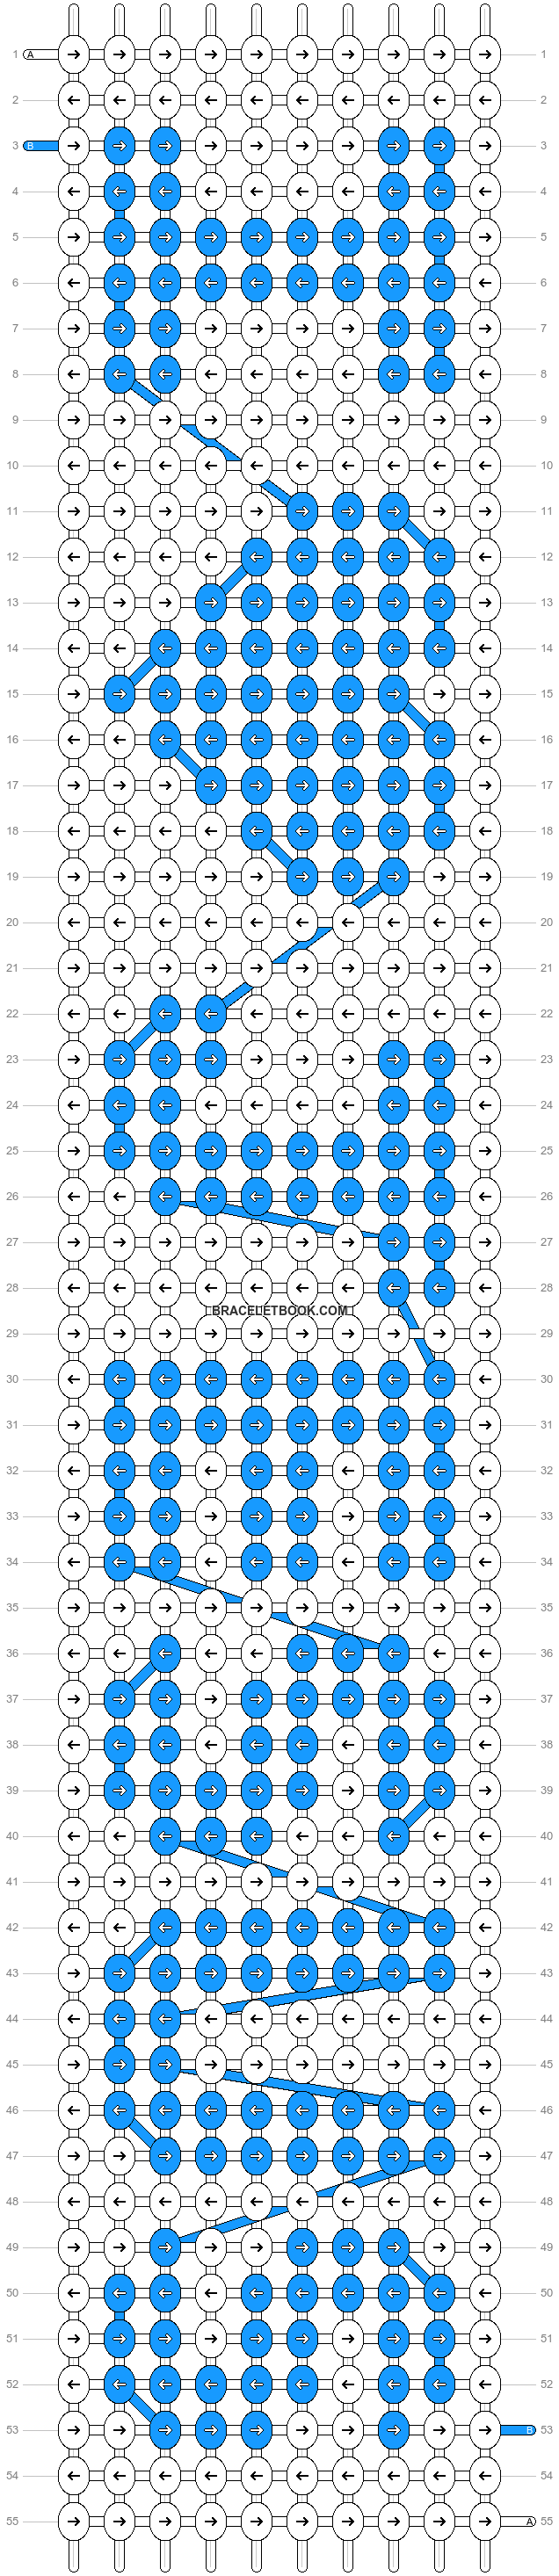 Alpha pattern #19594 variation #59148 pattern